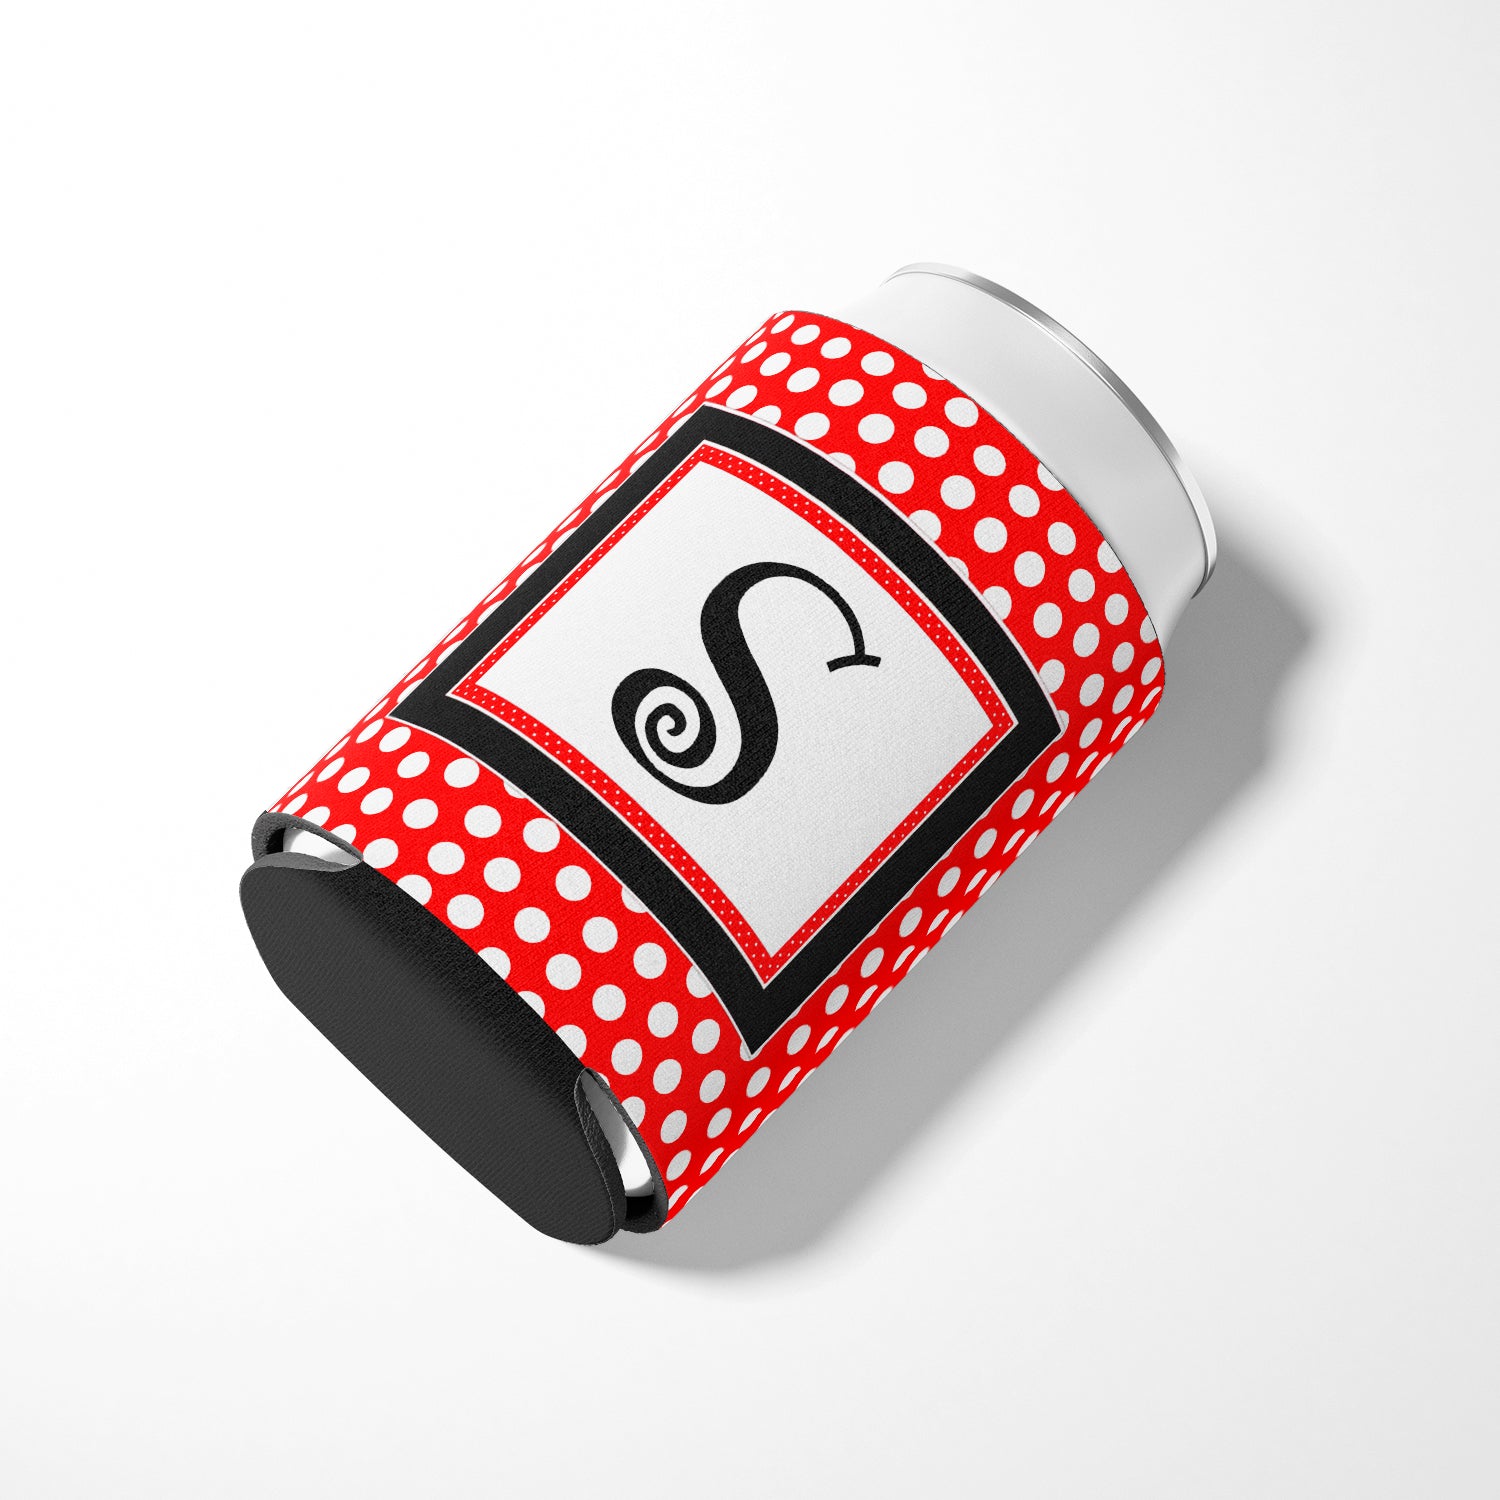 Letter S Initial Monogram - Red Black Polka Dots Can or Bottle Beverage Insulator Hugger.